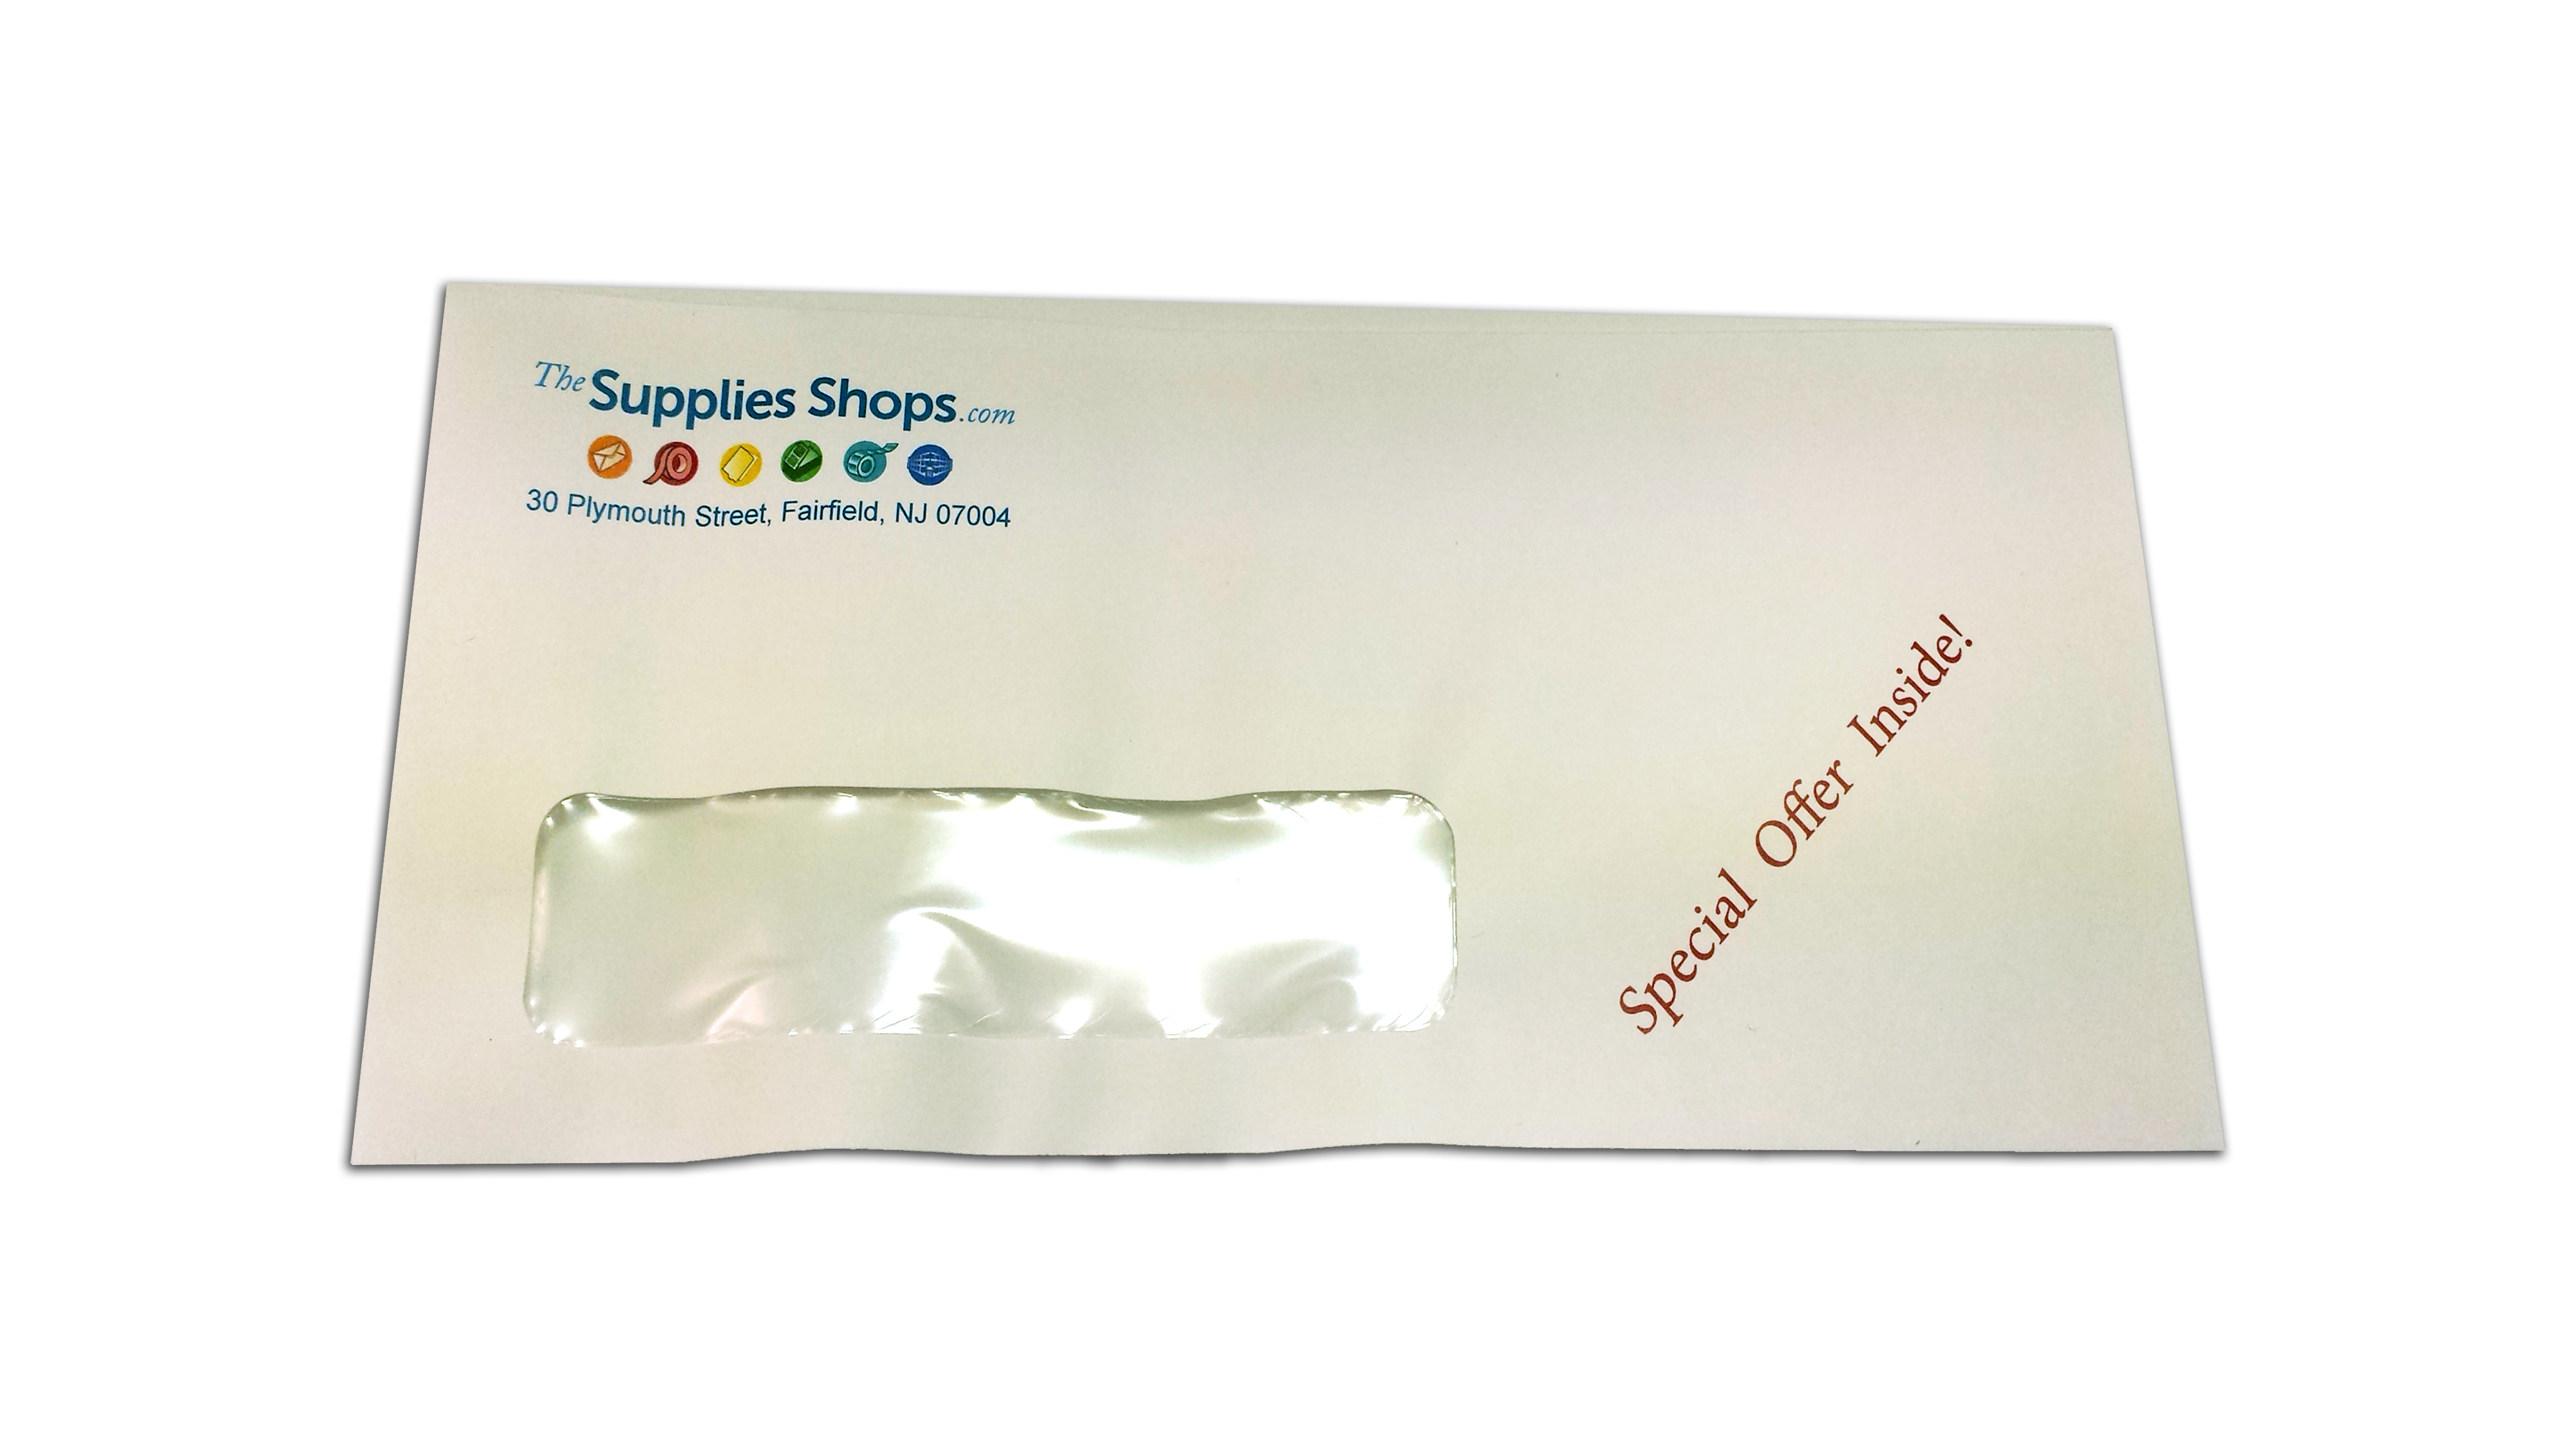 Window Envelopes for Laser Printing Supplies Shops